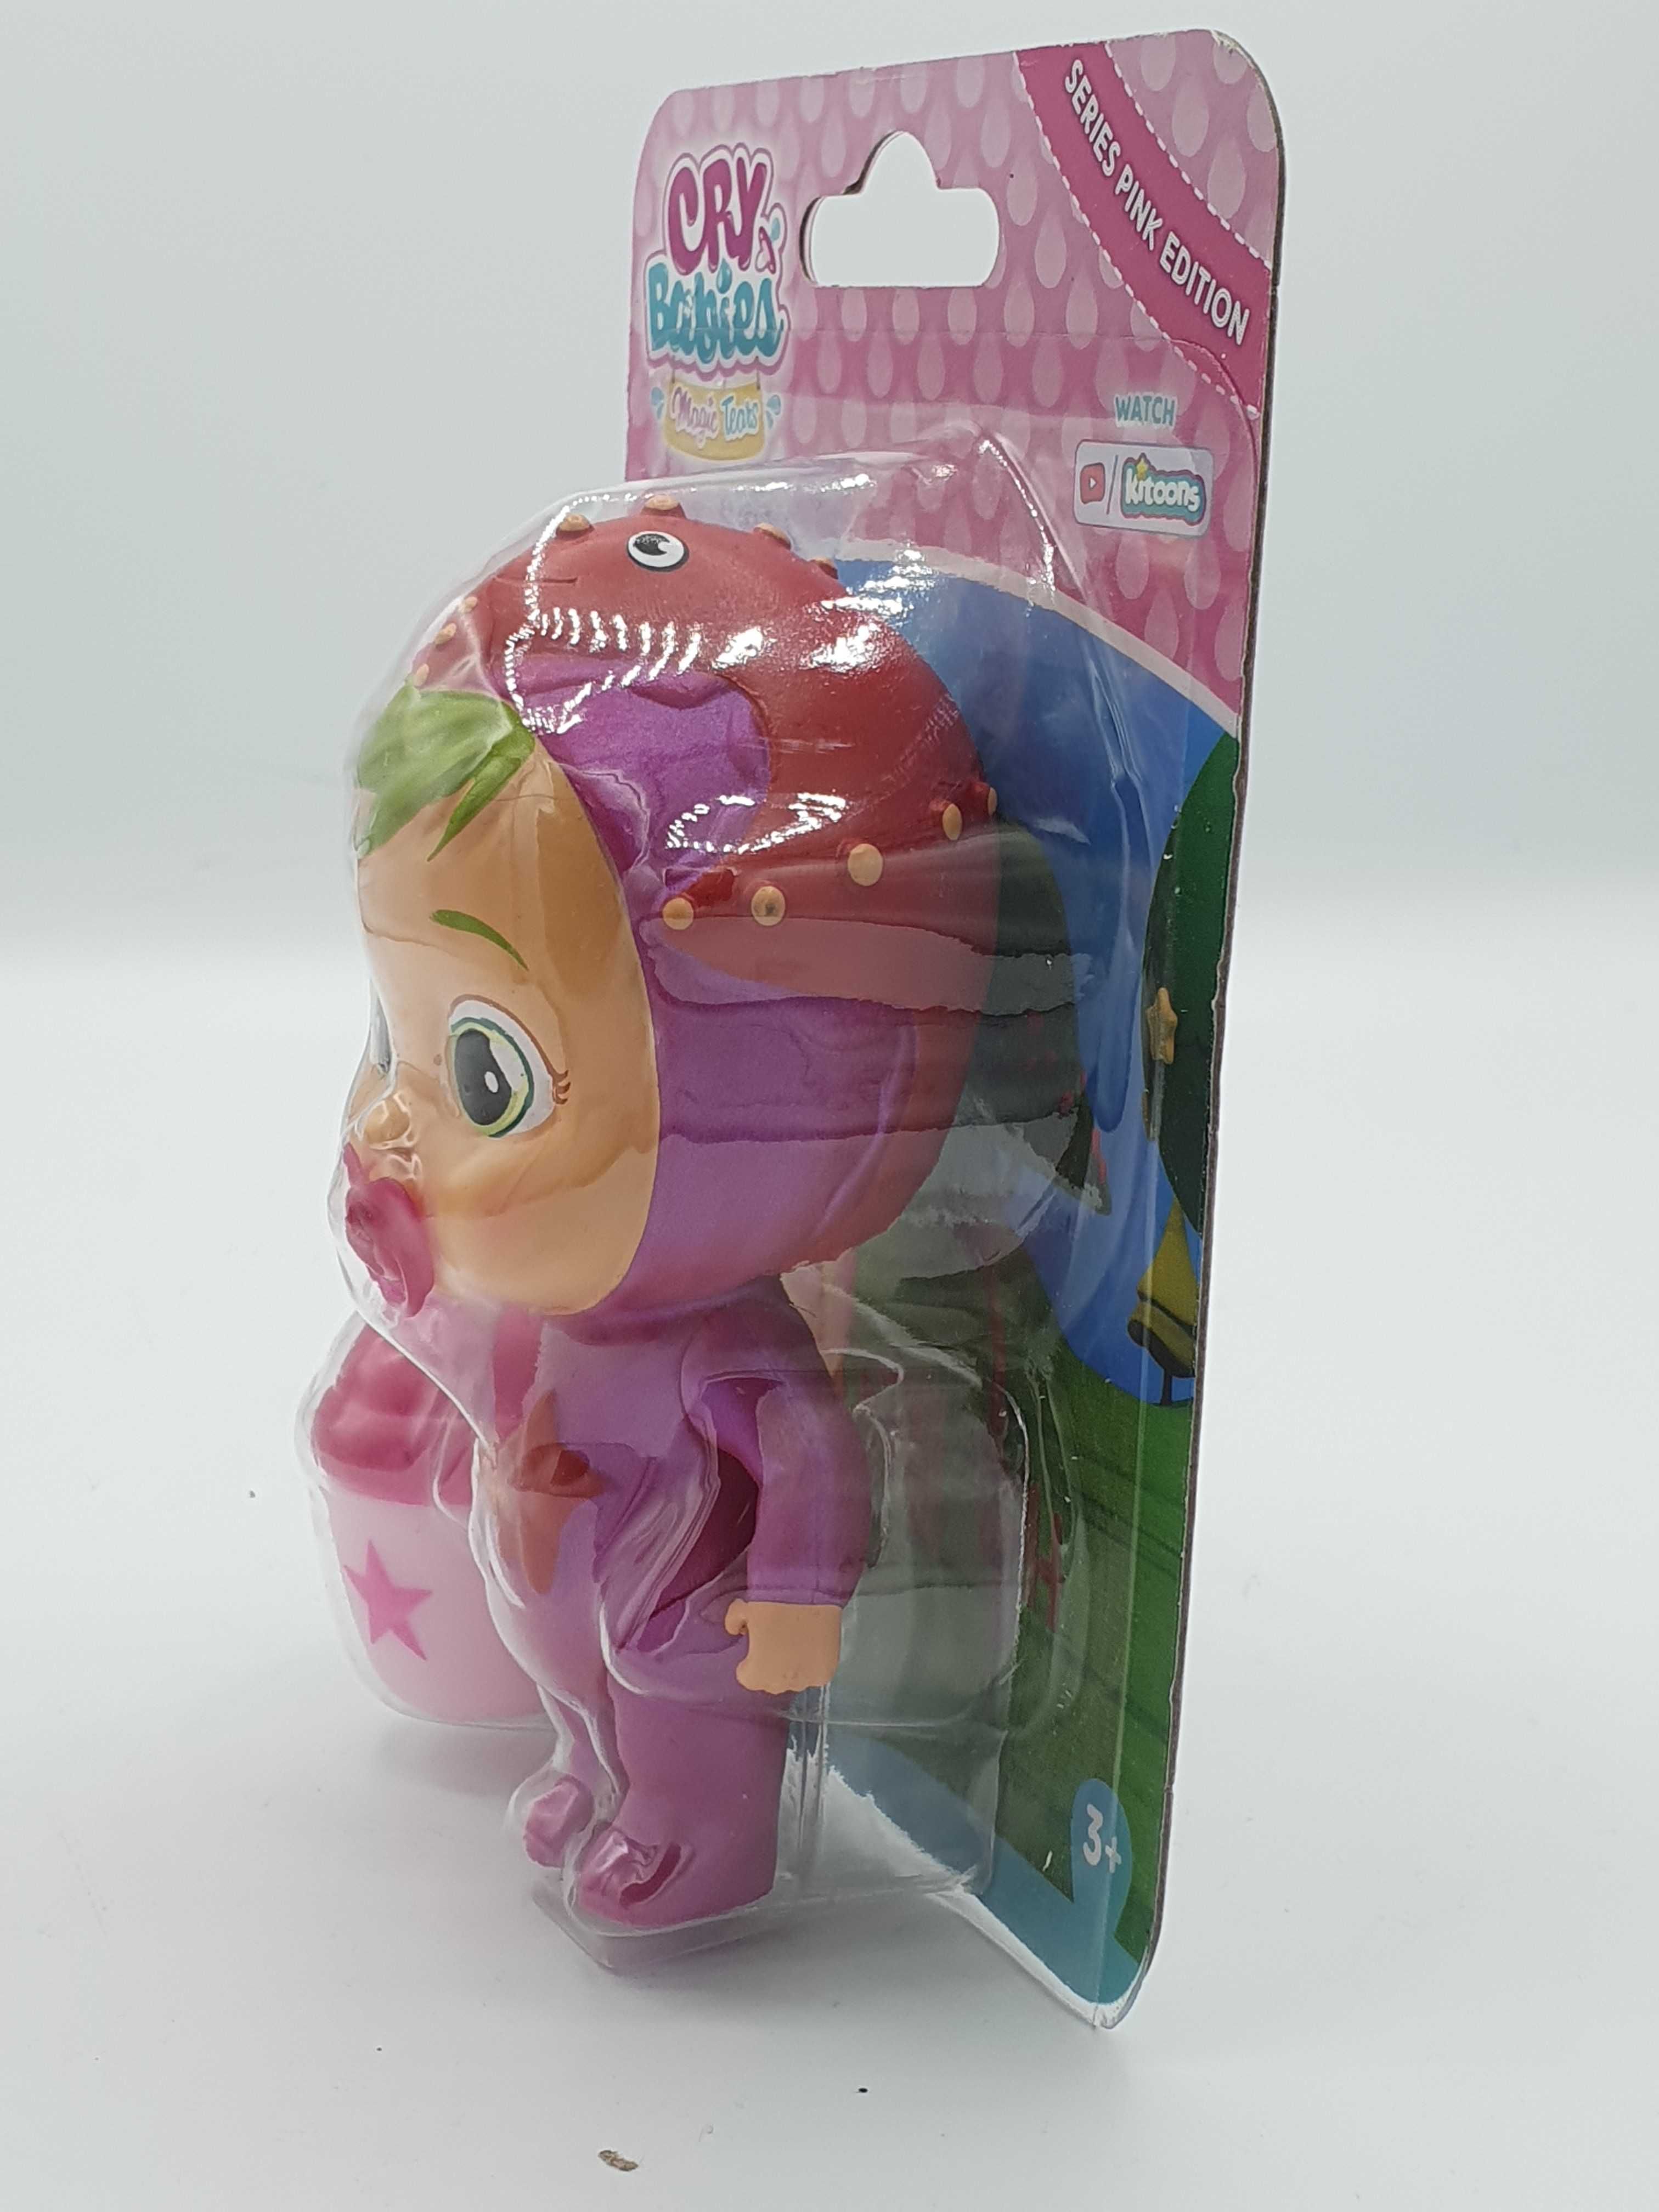 Lalka Cry Babies TM Toys Magic Tears Pink Edition 13 cm